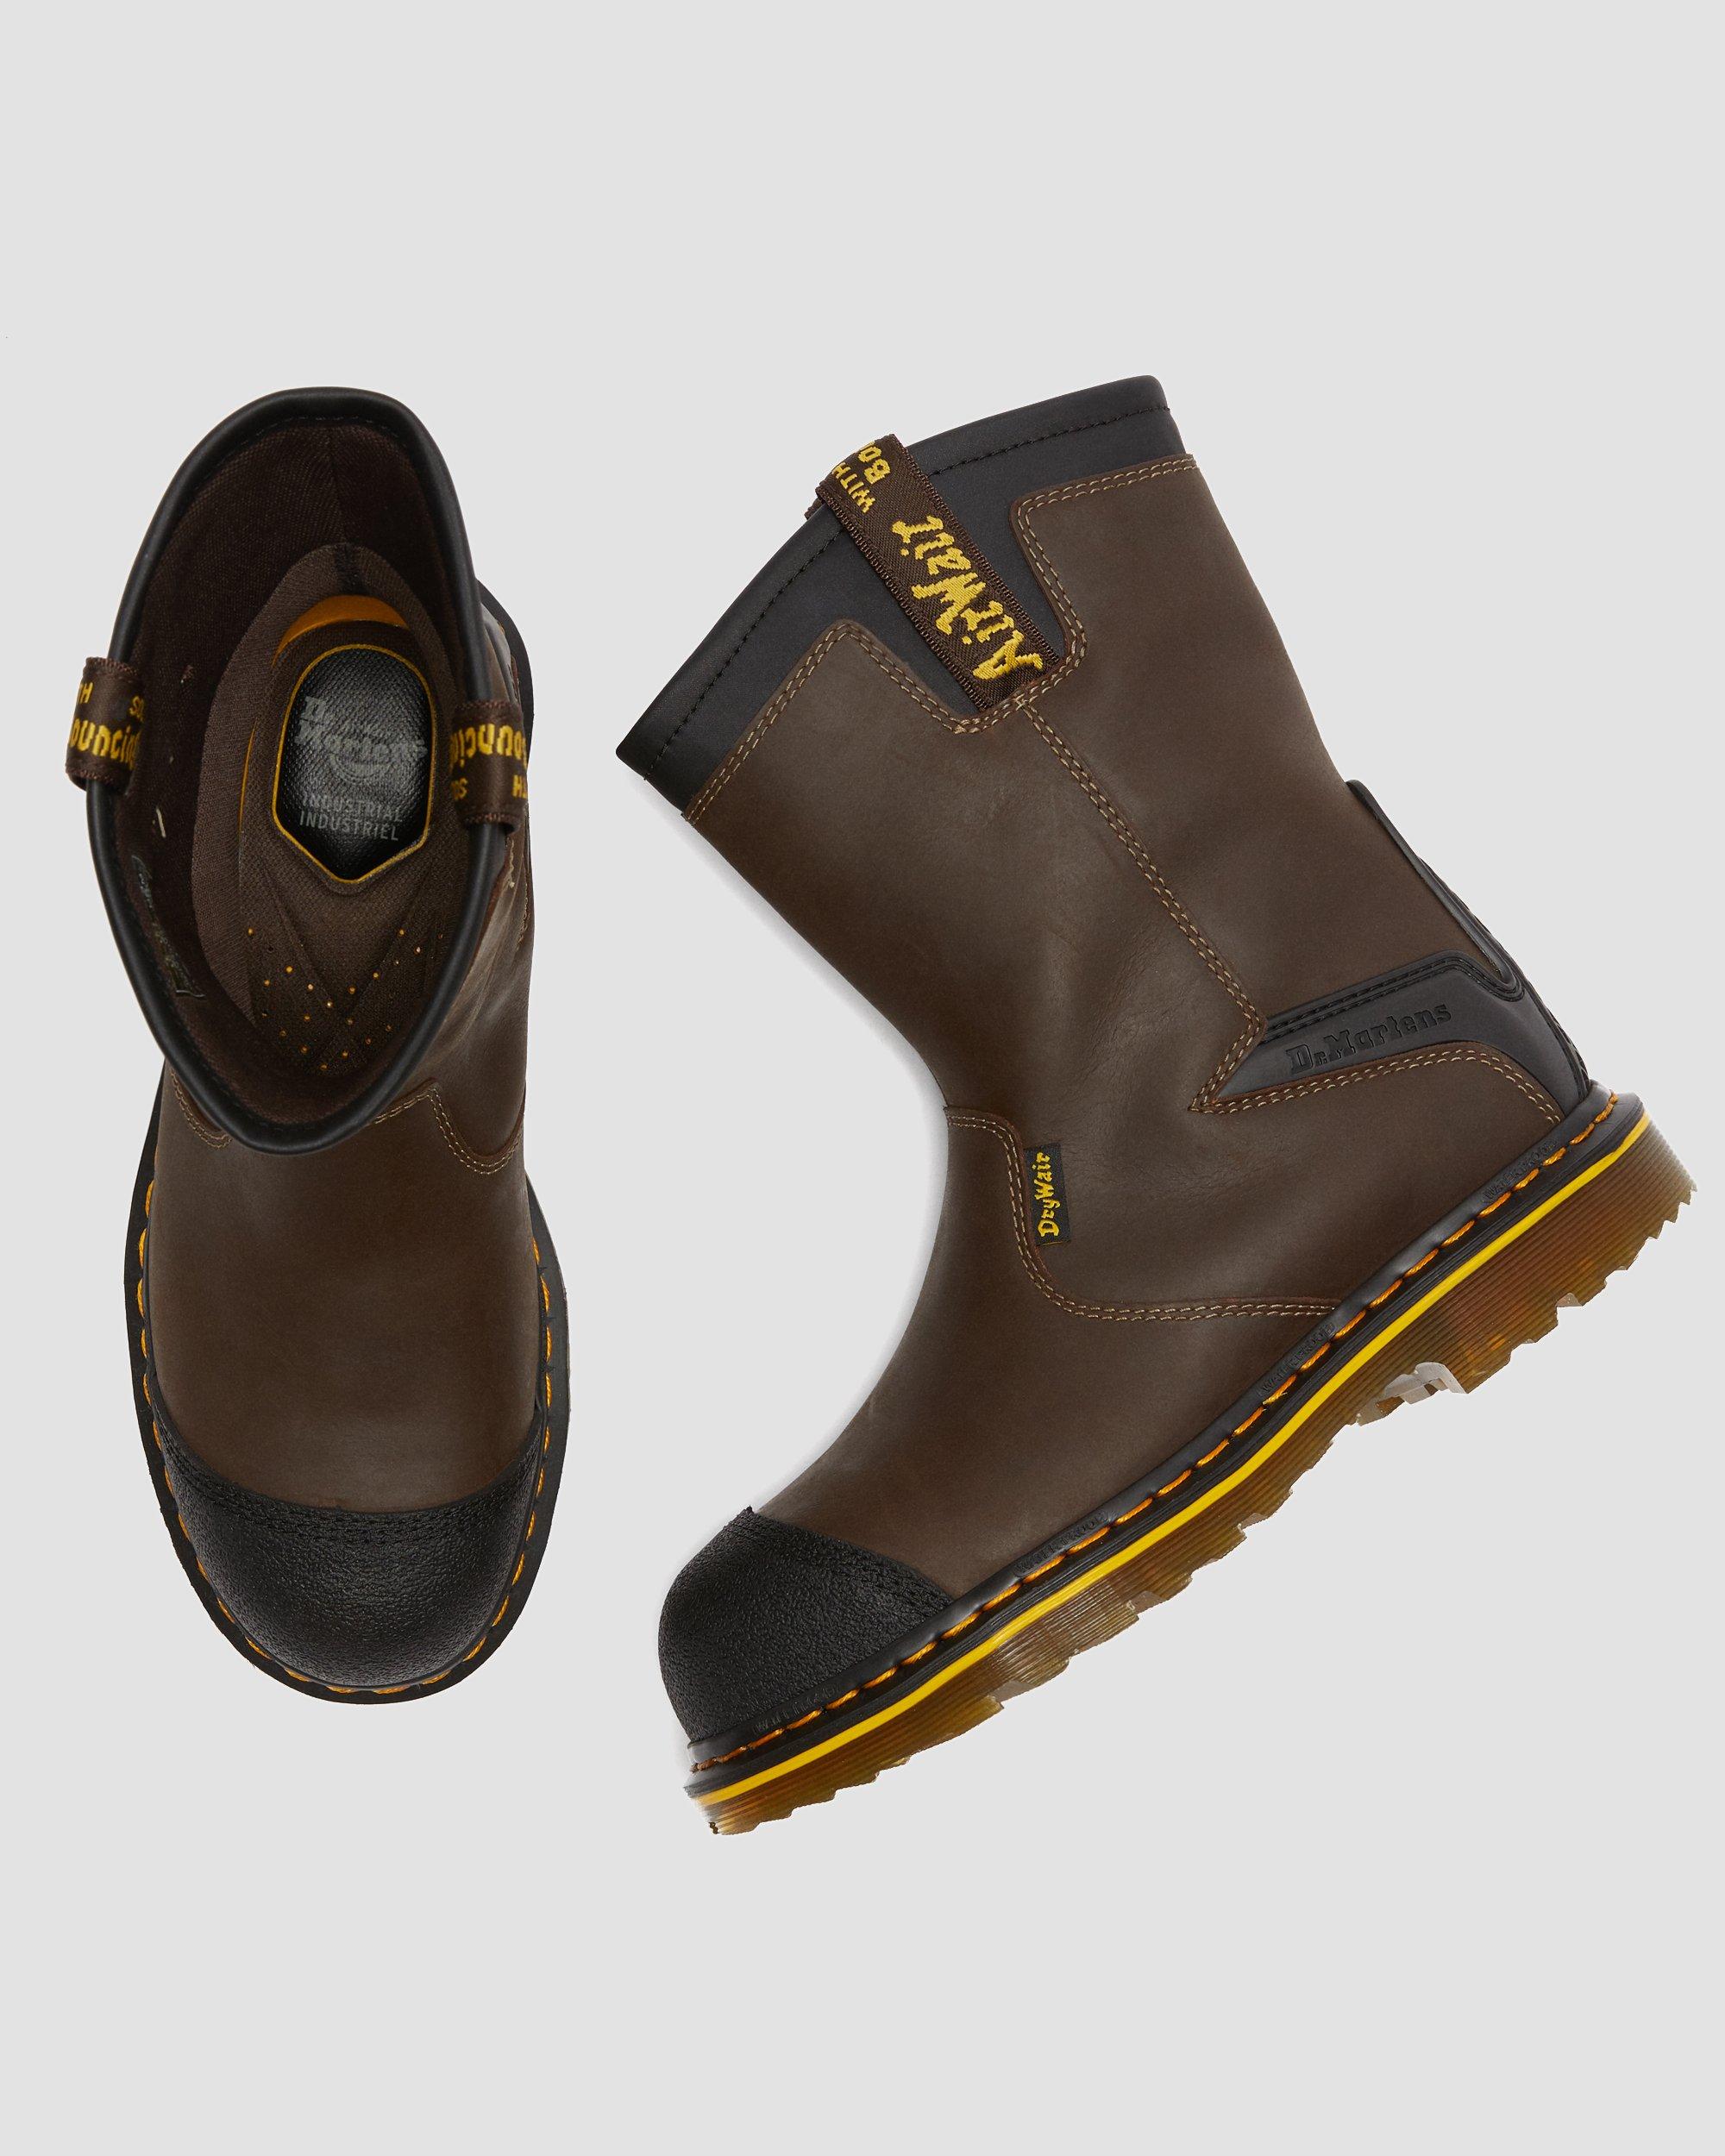 Firth Waterproof Leather Steel Toe Work Boots in Dark Brown